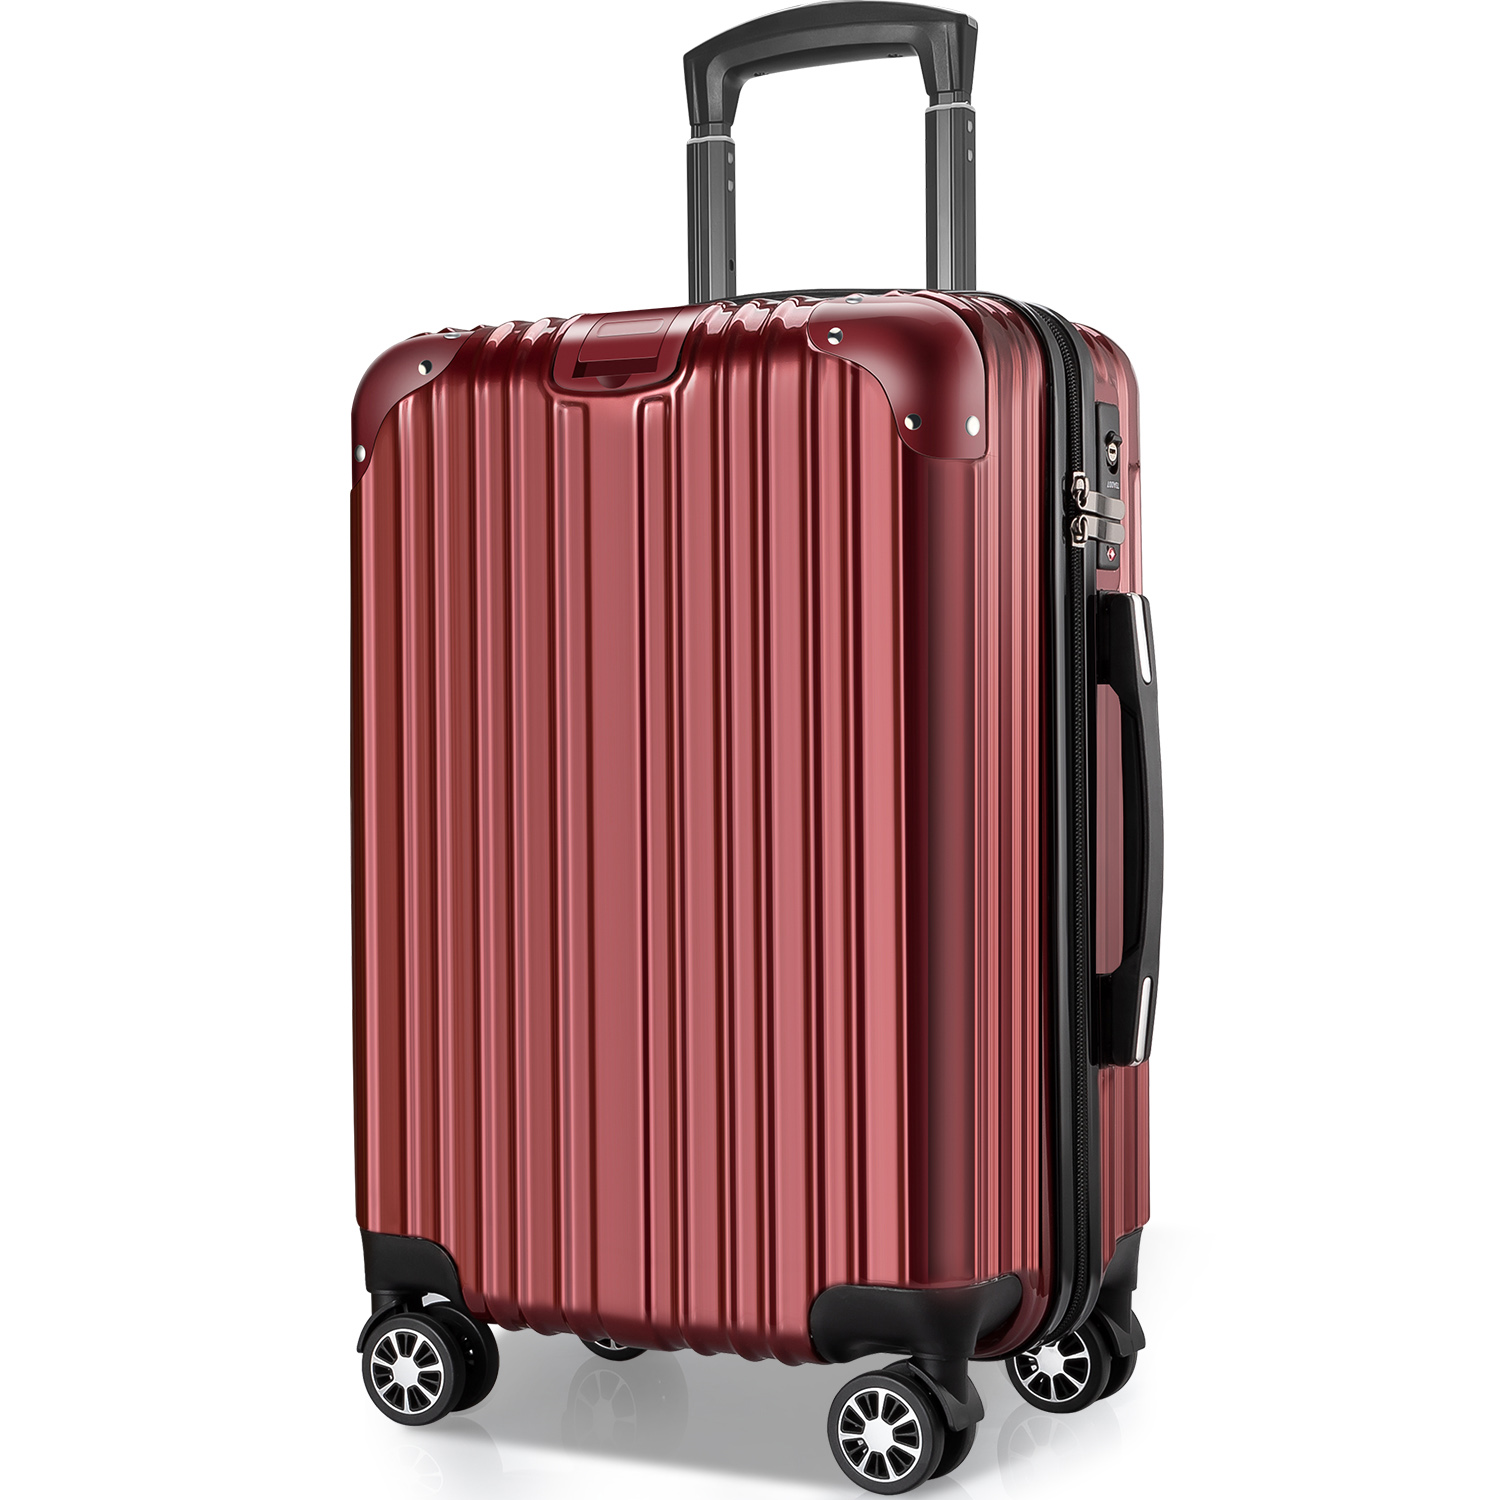 VARNIC スーツケース キャリーバッグ キャリーケース 機内持込 静音 TSAローク 軽量 ファスナー式 Sサイズ